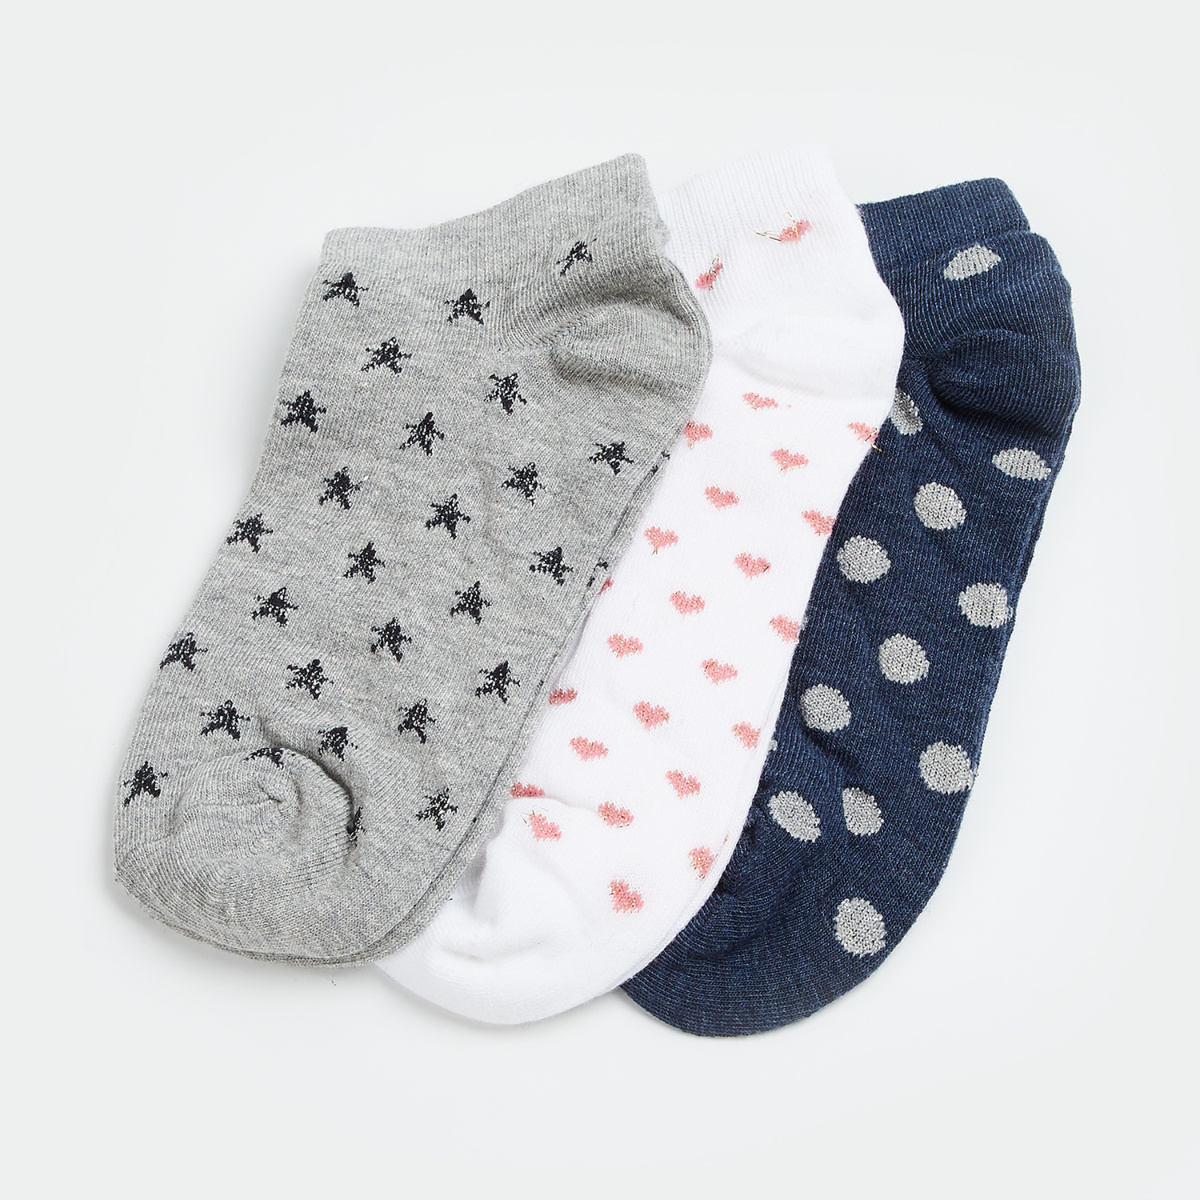 GINGER Patterned Knit Ankle Socks - Pack of 3